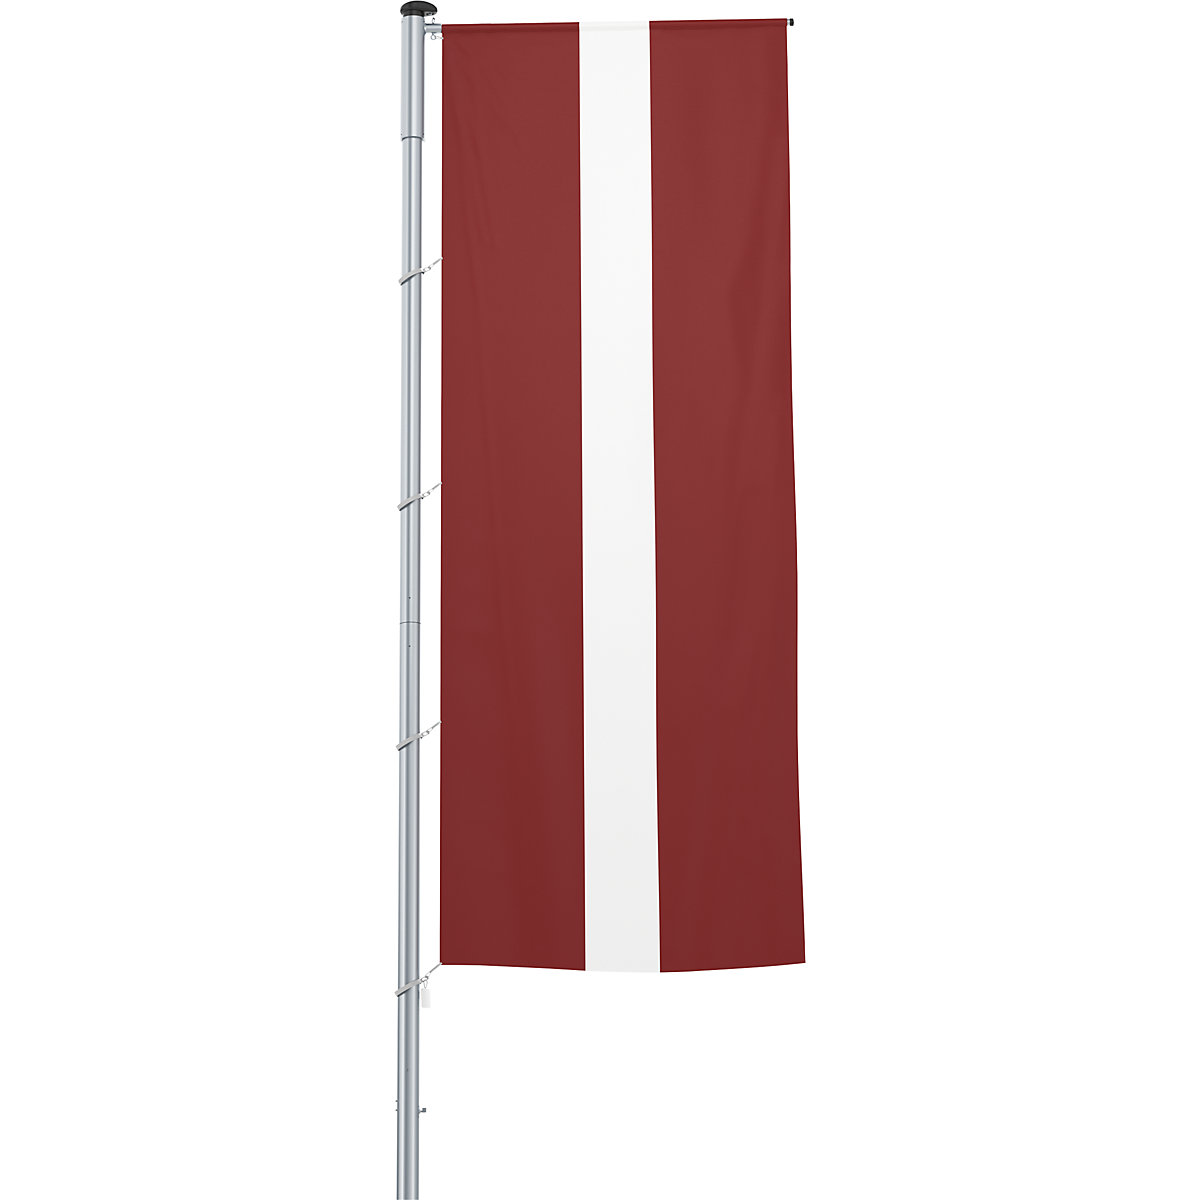 Steag pentru braț/drapel național – Mannus, format 1,2 x 3 m, Letonia-30